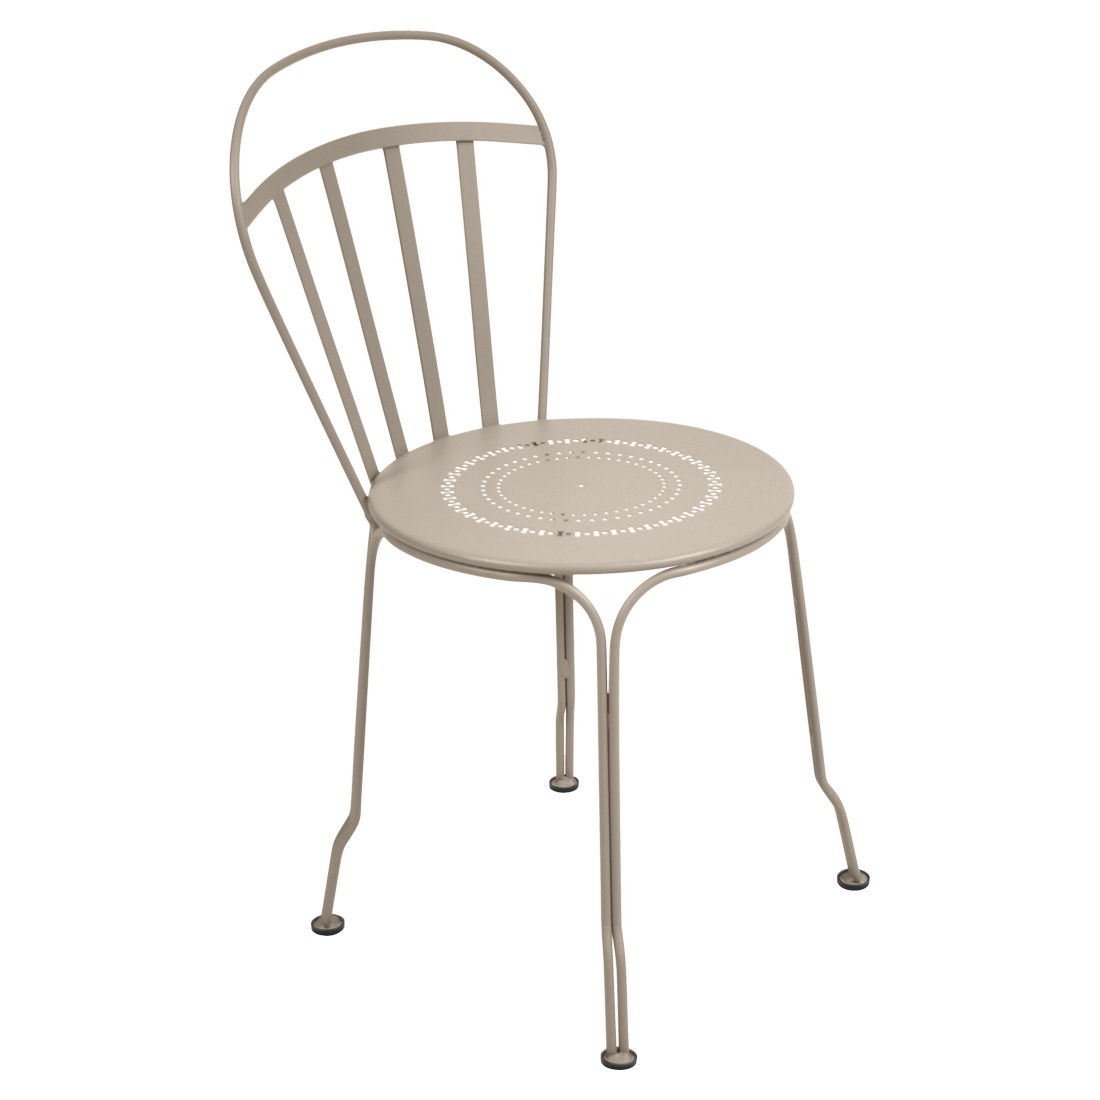 Louvre Chair